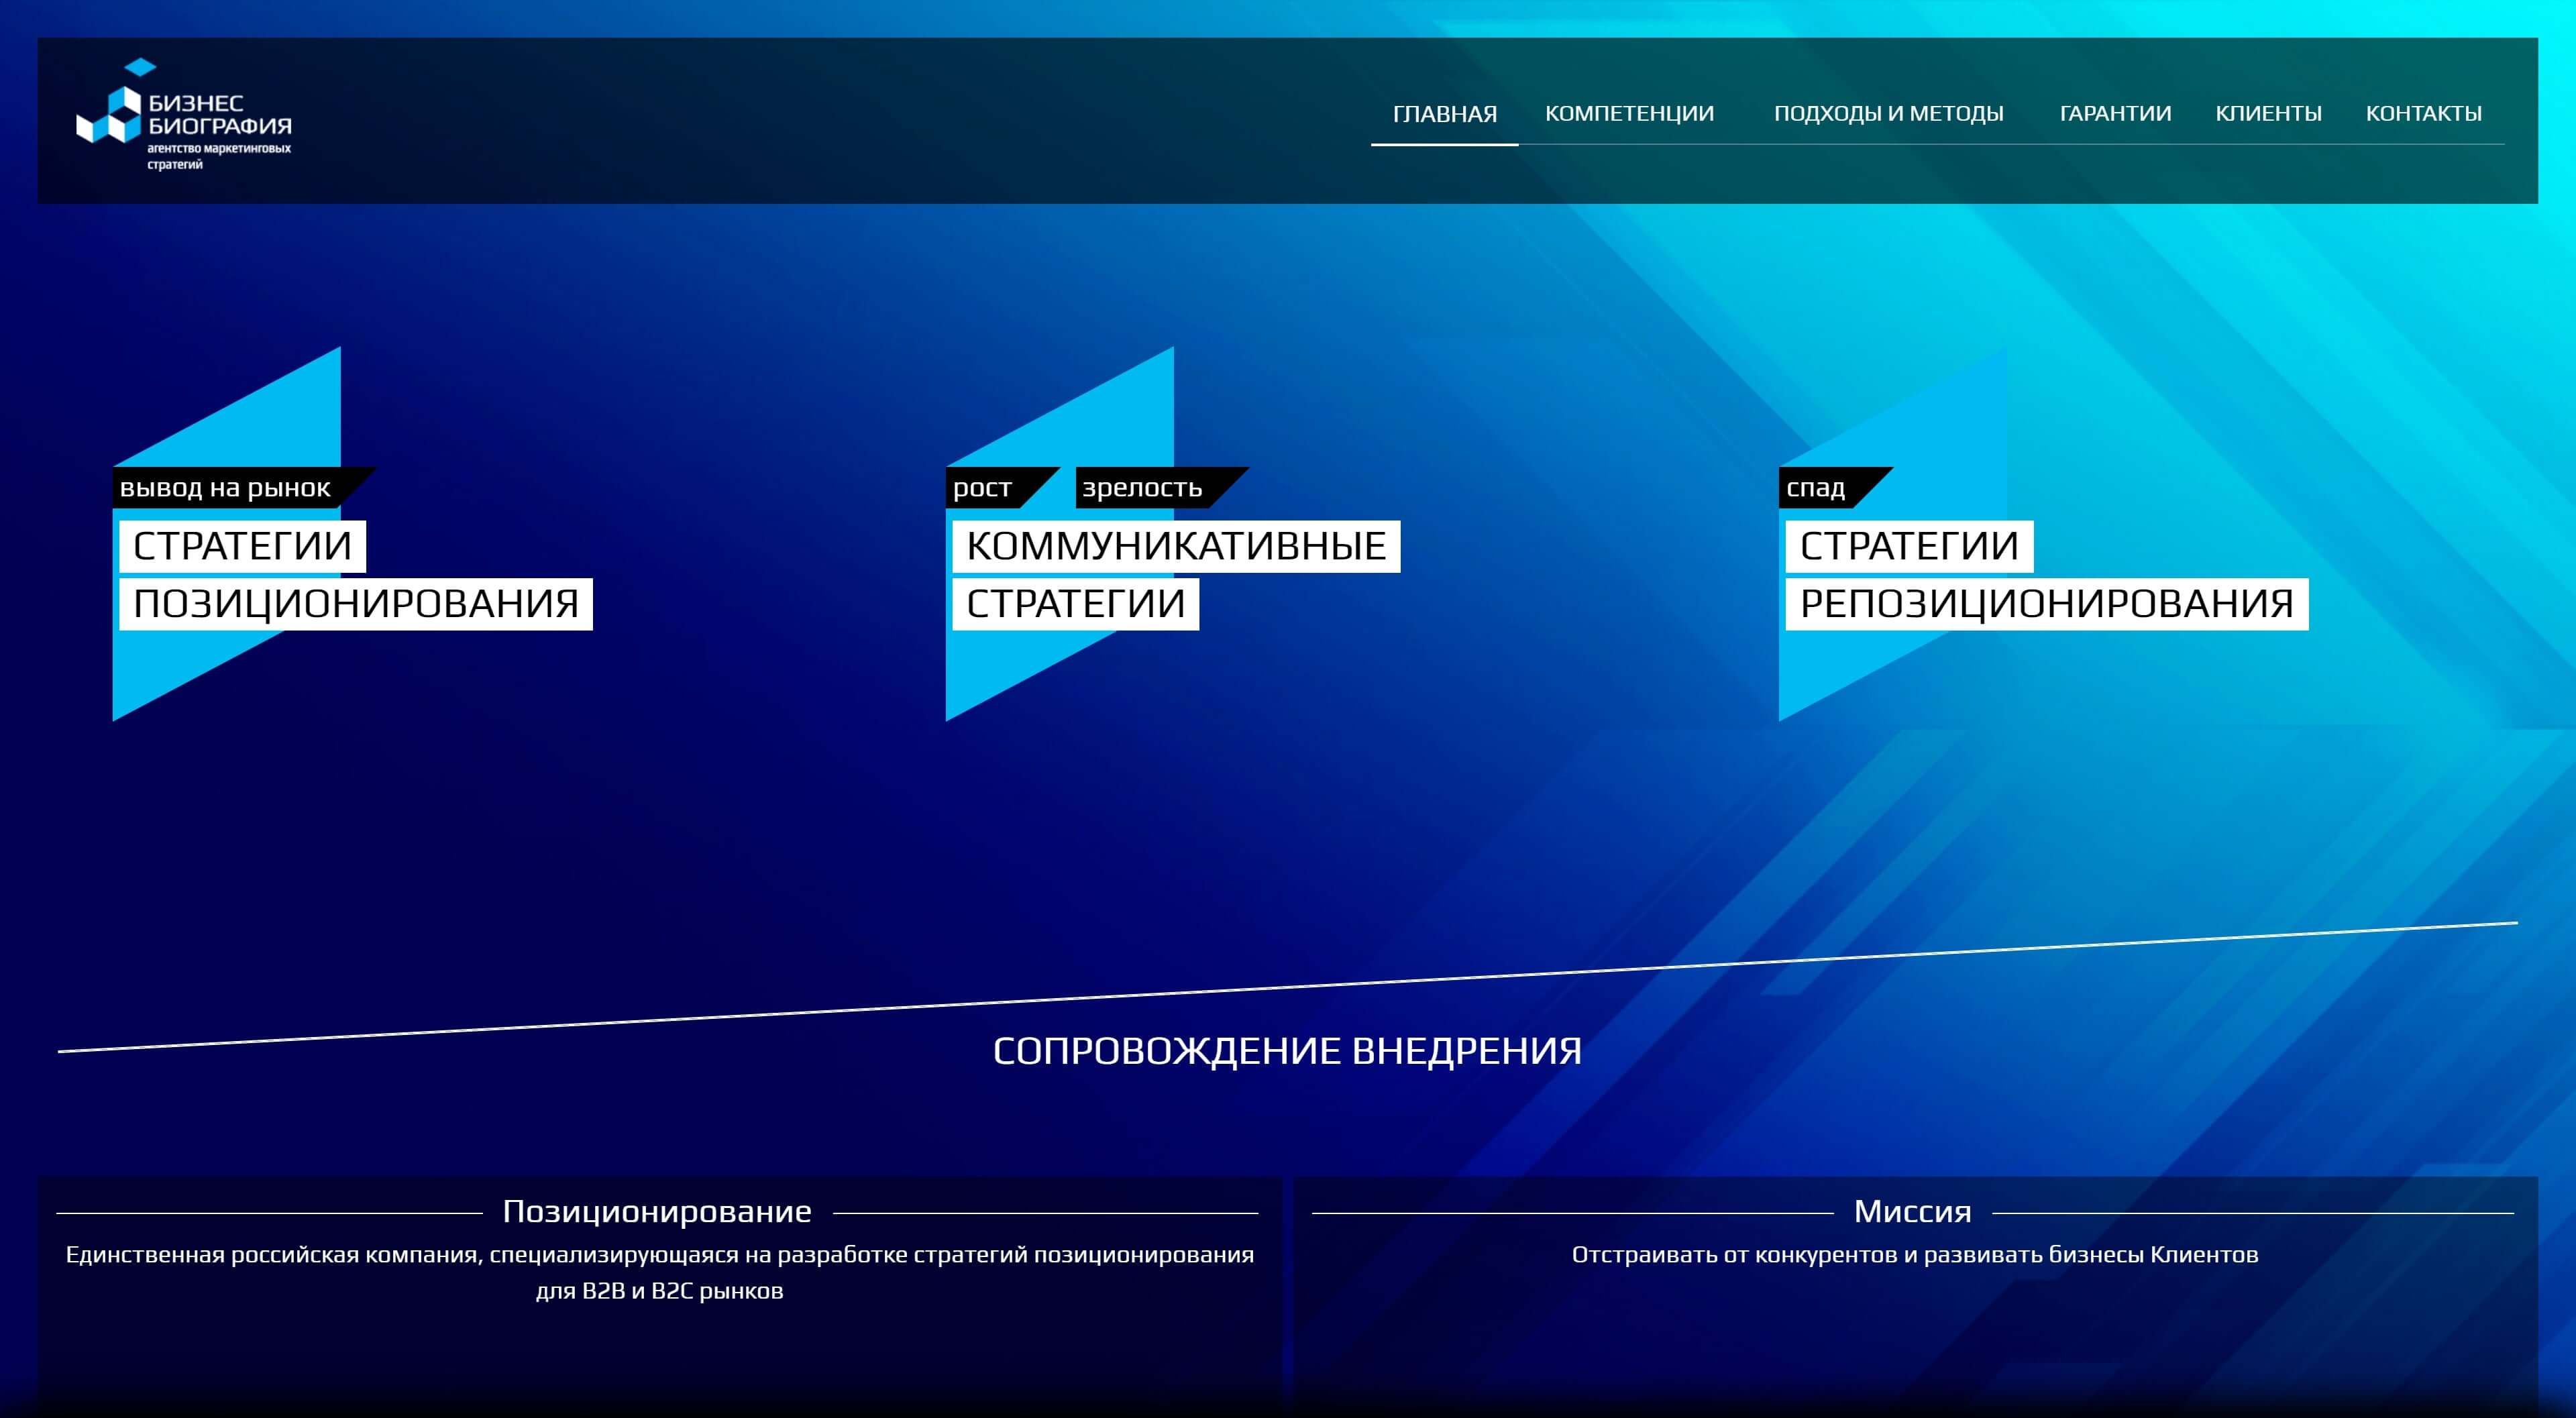 image of the desktop version of the site «Biographiya»